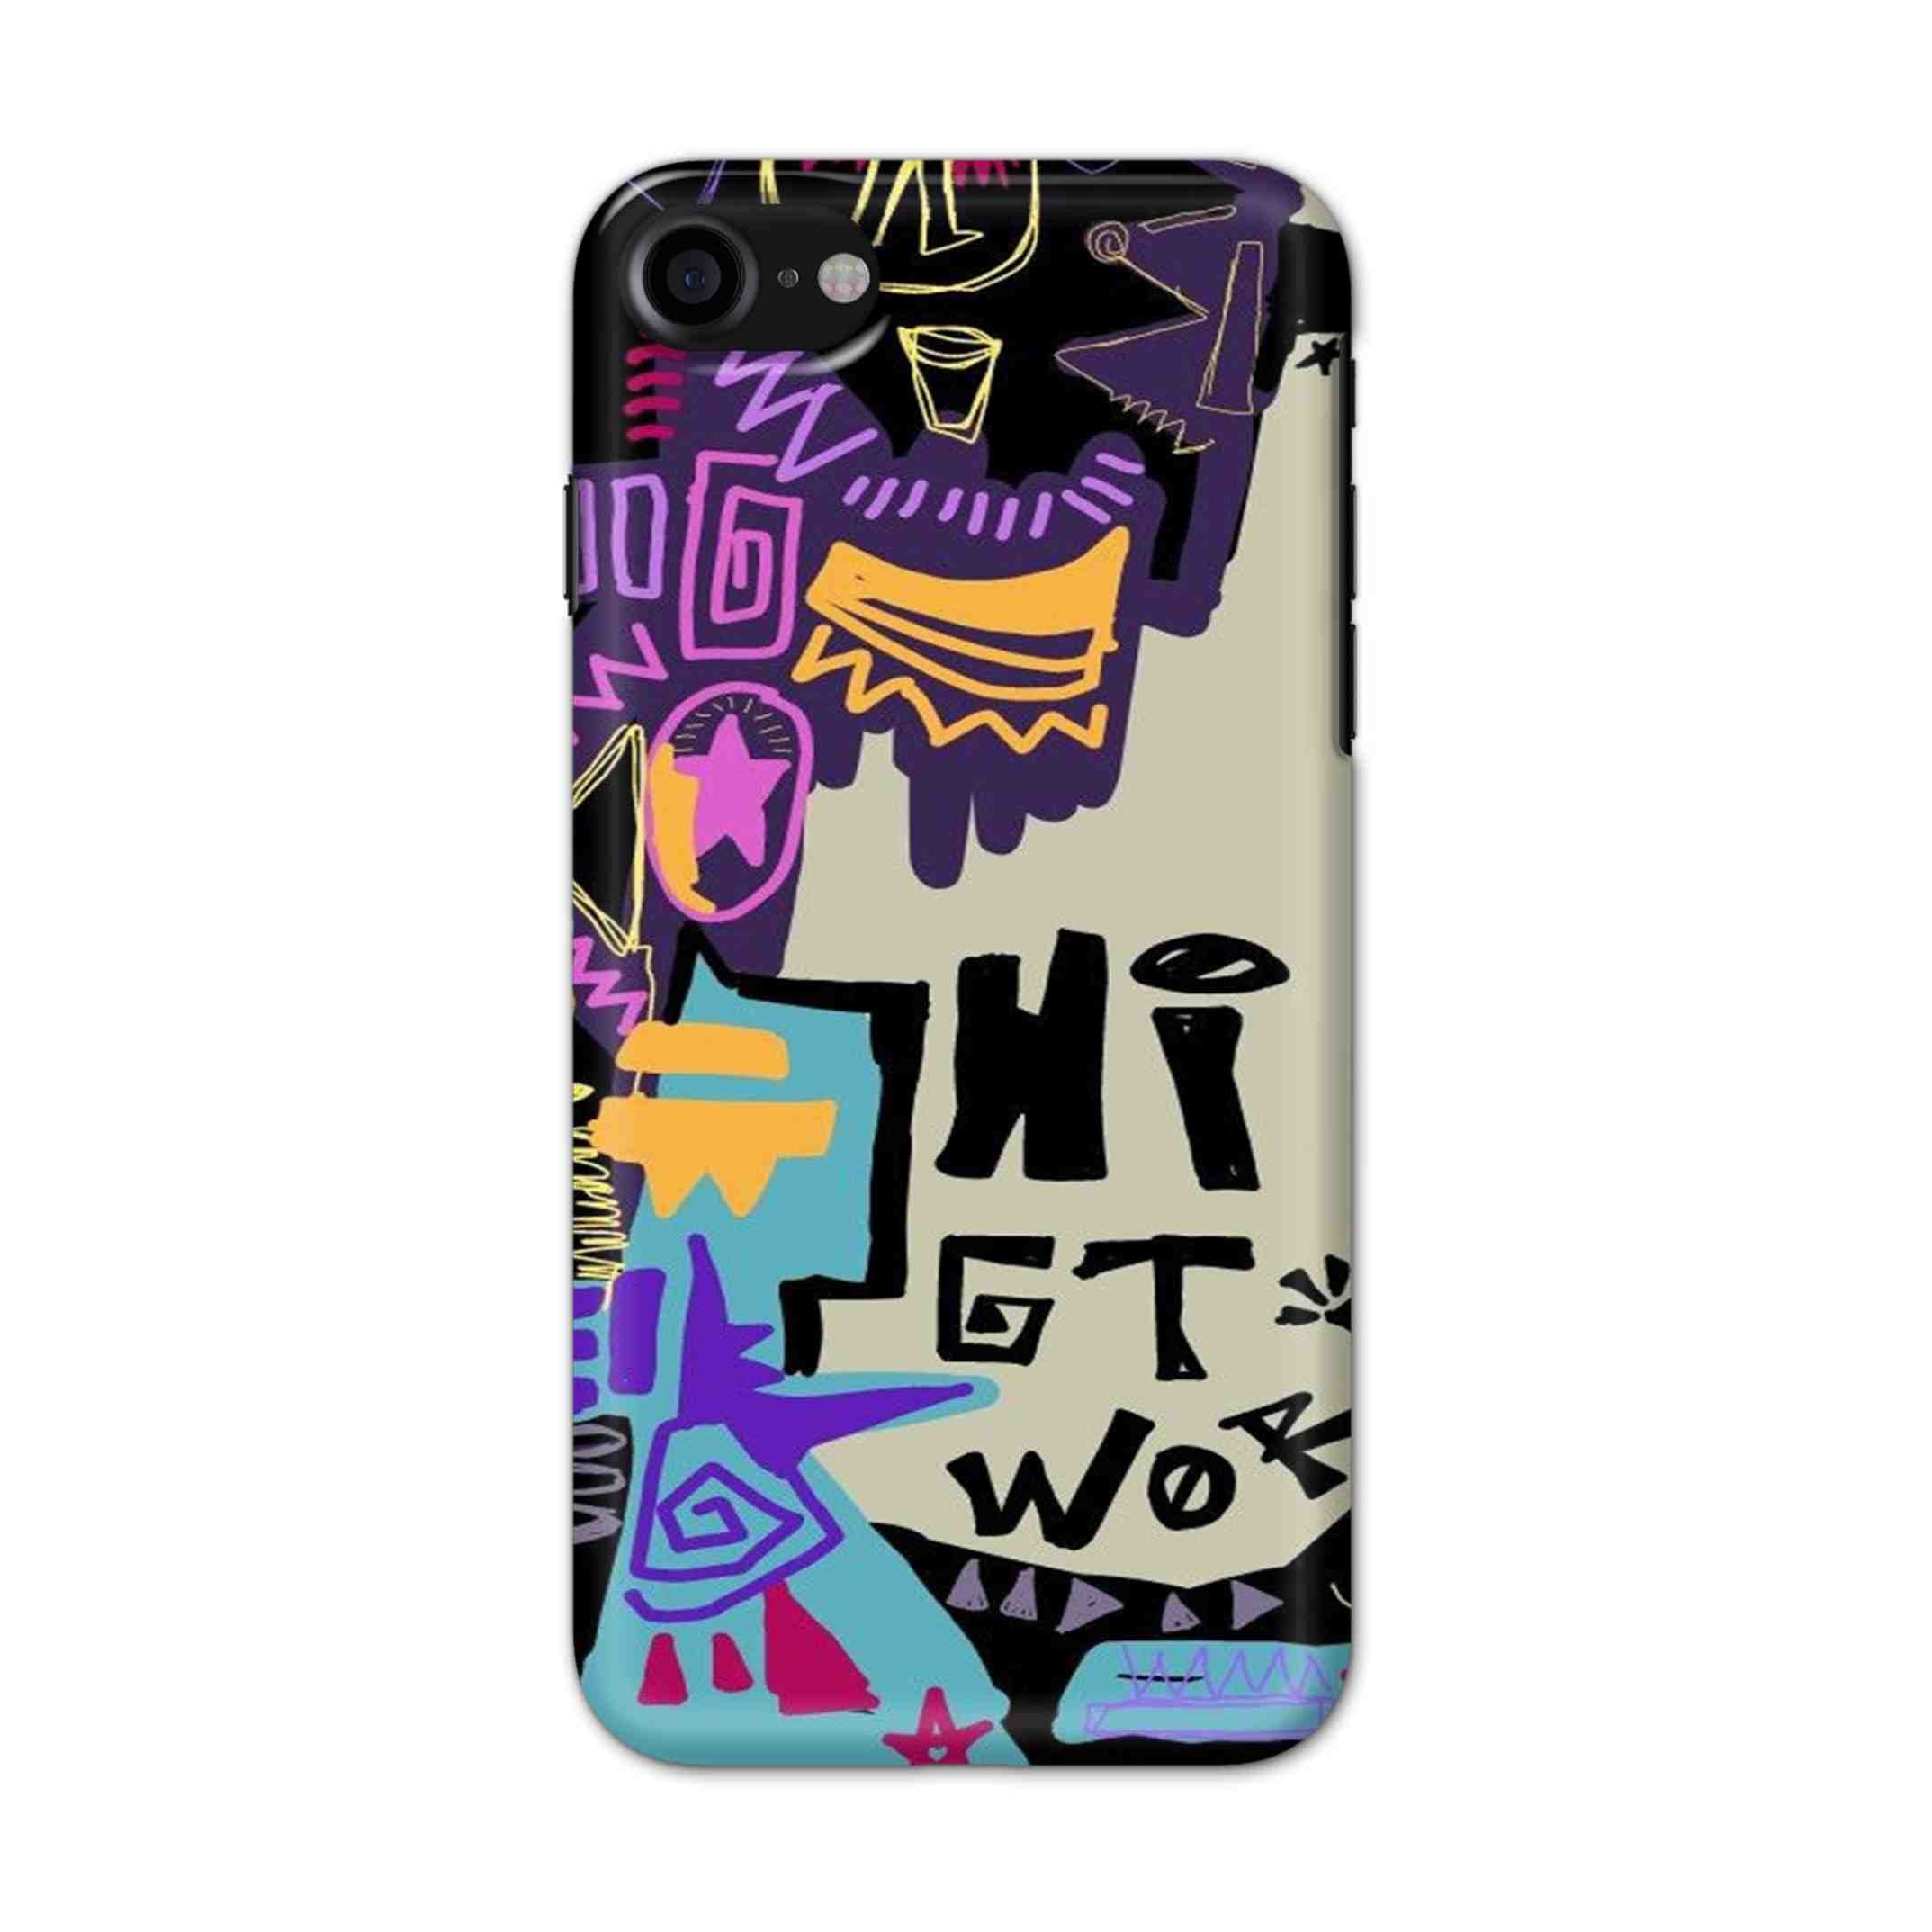 Buy Hi Gt World Hard Back Mobile Phone Case/Cover For iPhone 7 / 8 Online